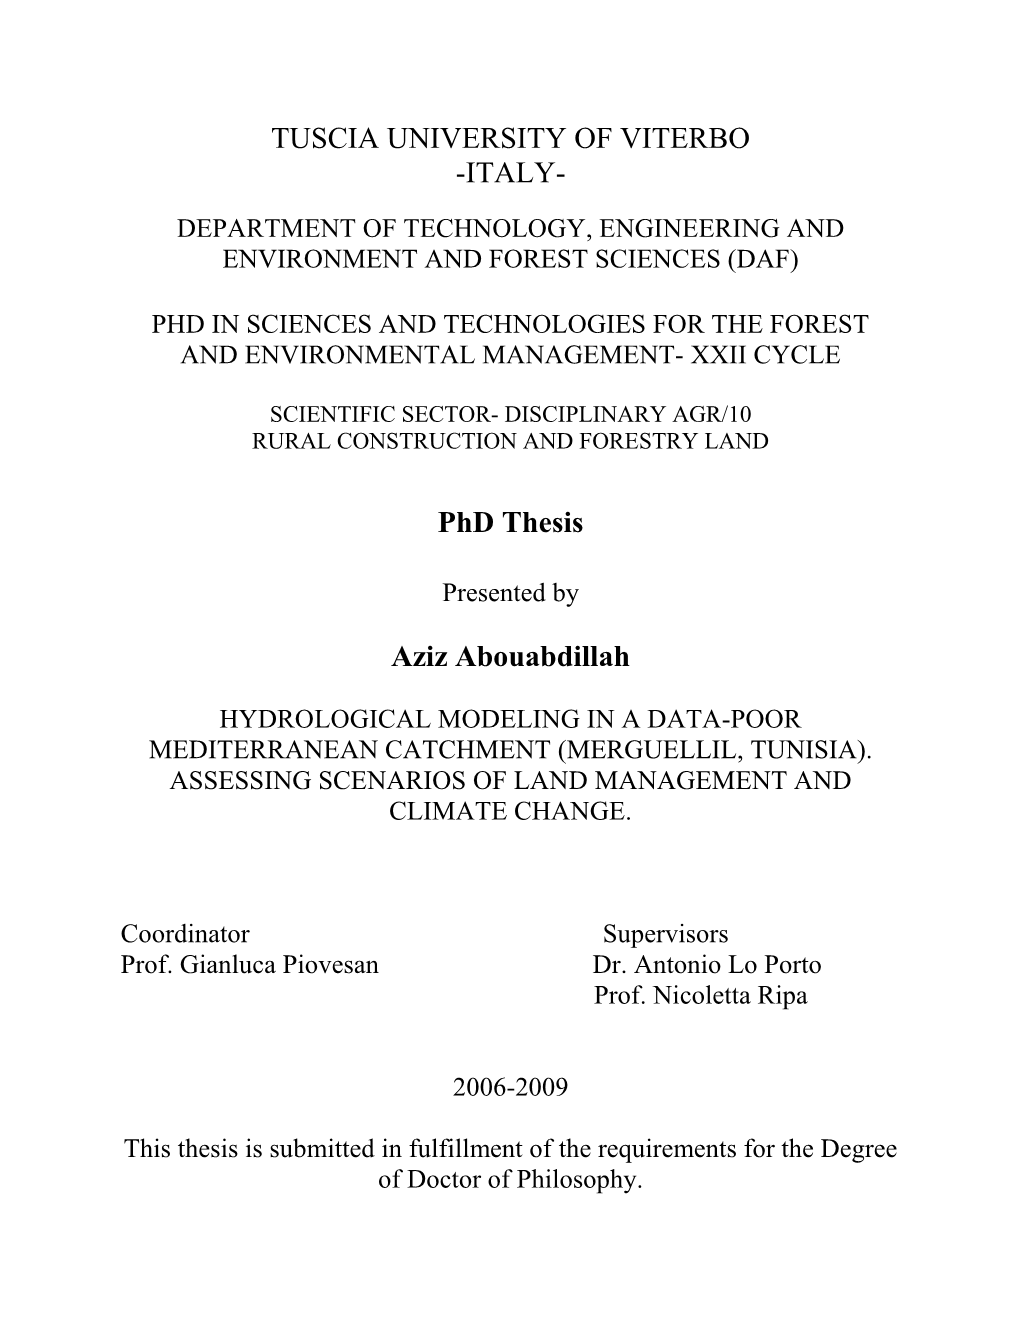 TUSCIA UNIVERSITY of VITERBO -ITALY- Phd